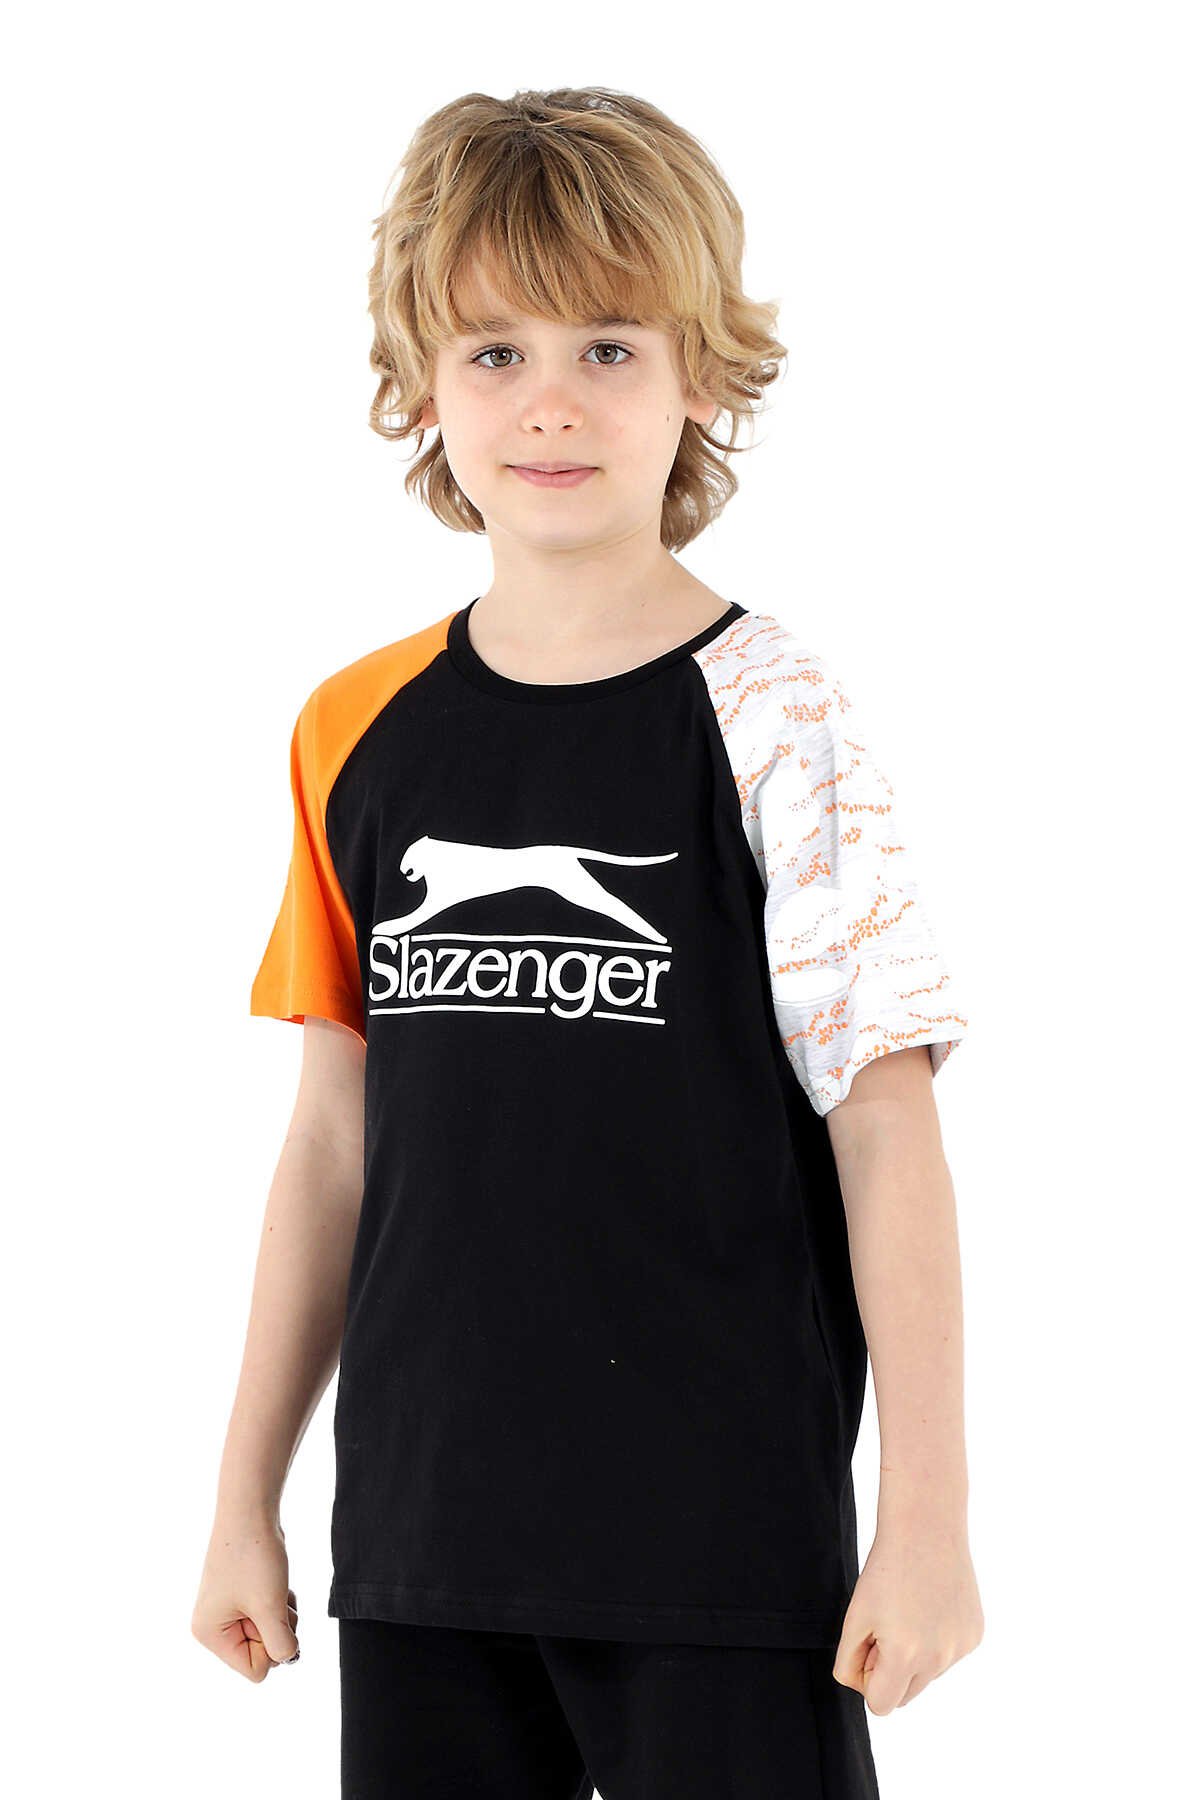 Slazenger - Slazenger PARVEEN Erkek Çocuk Kısa Kollu T-Shirt Siyah